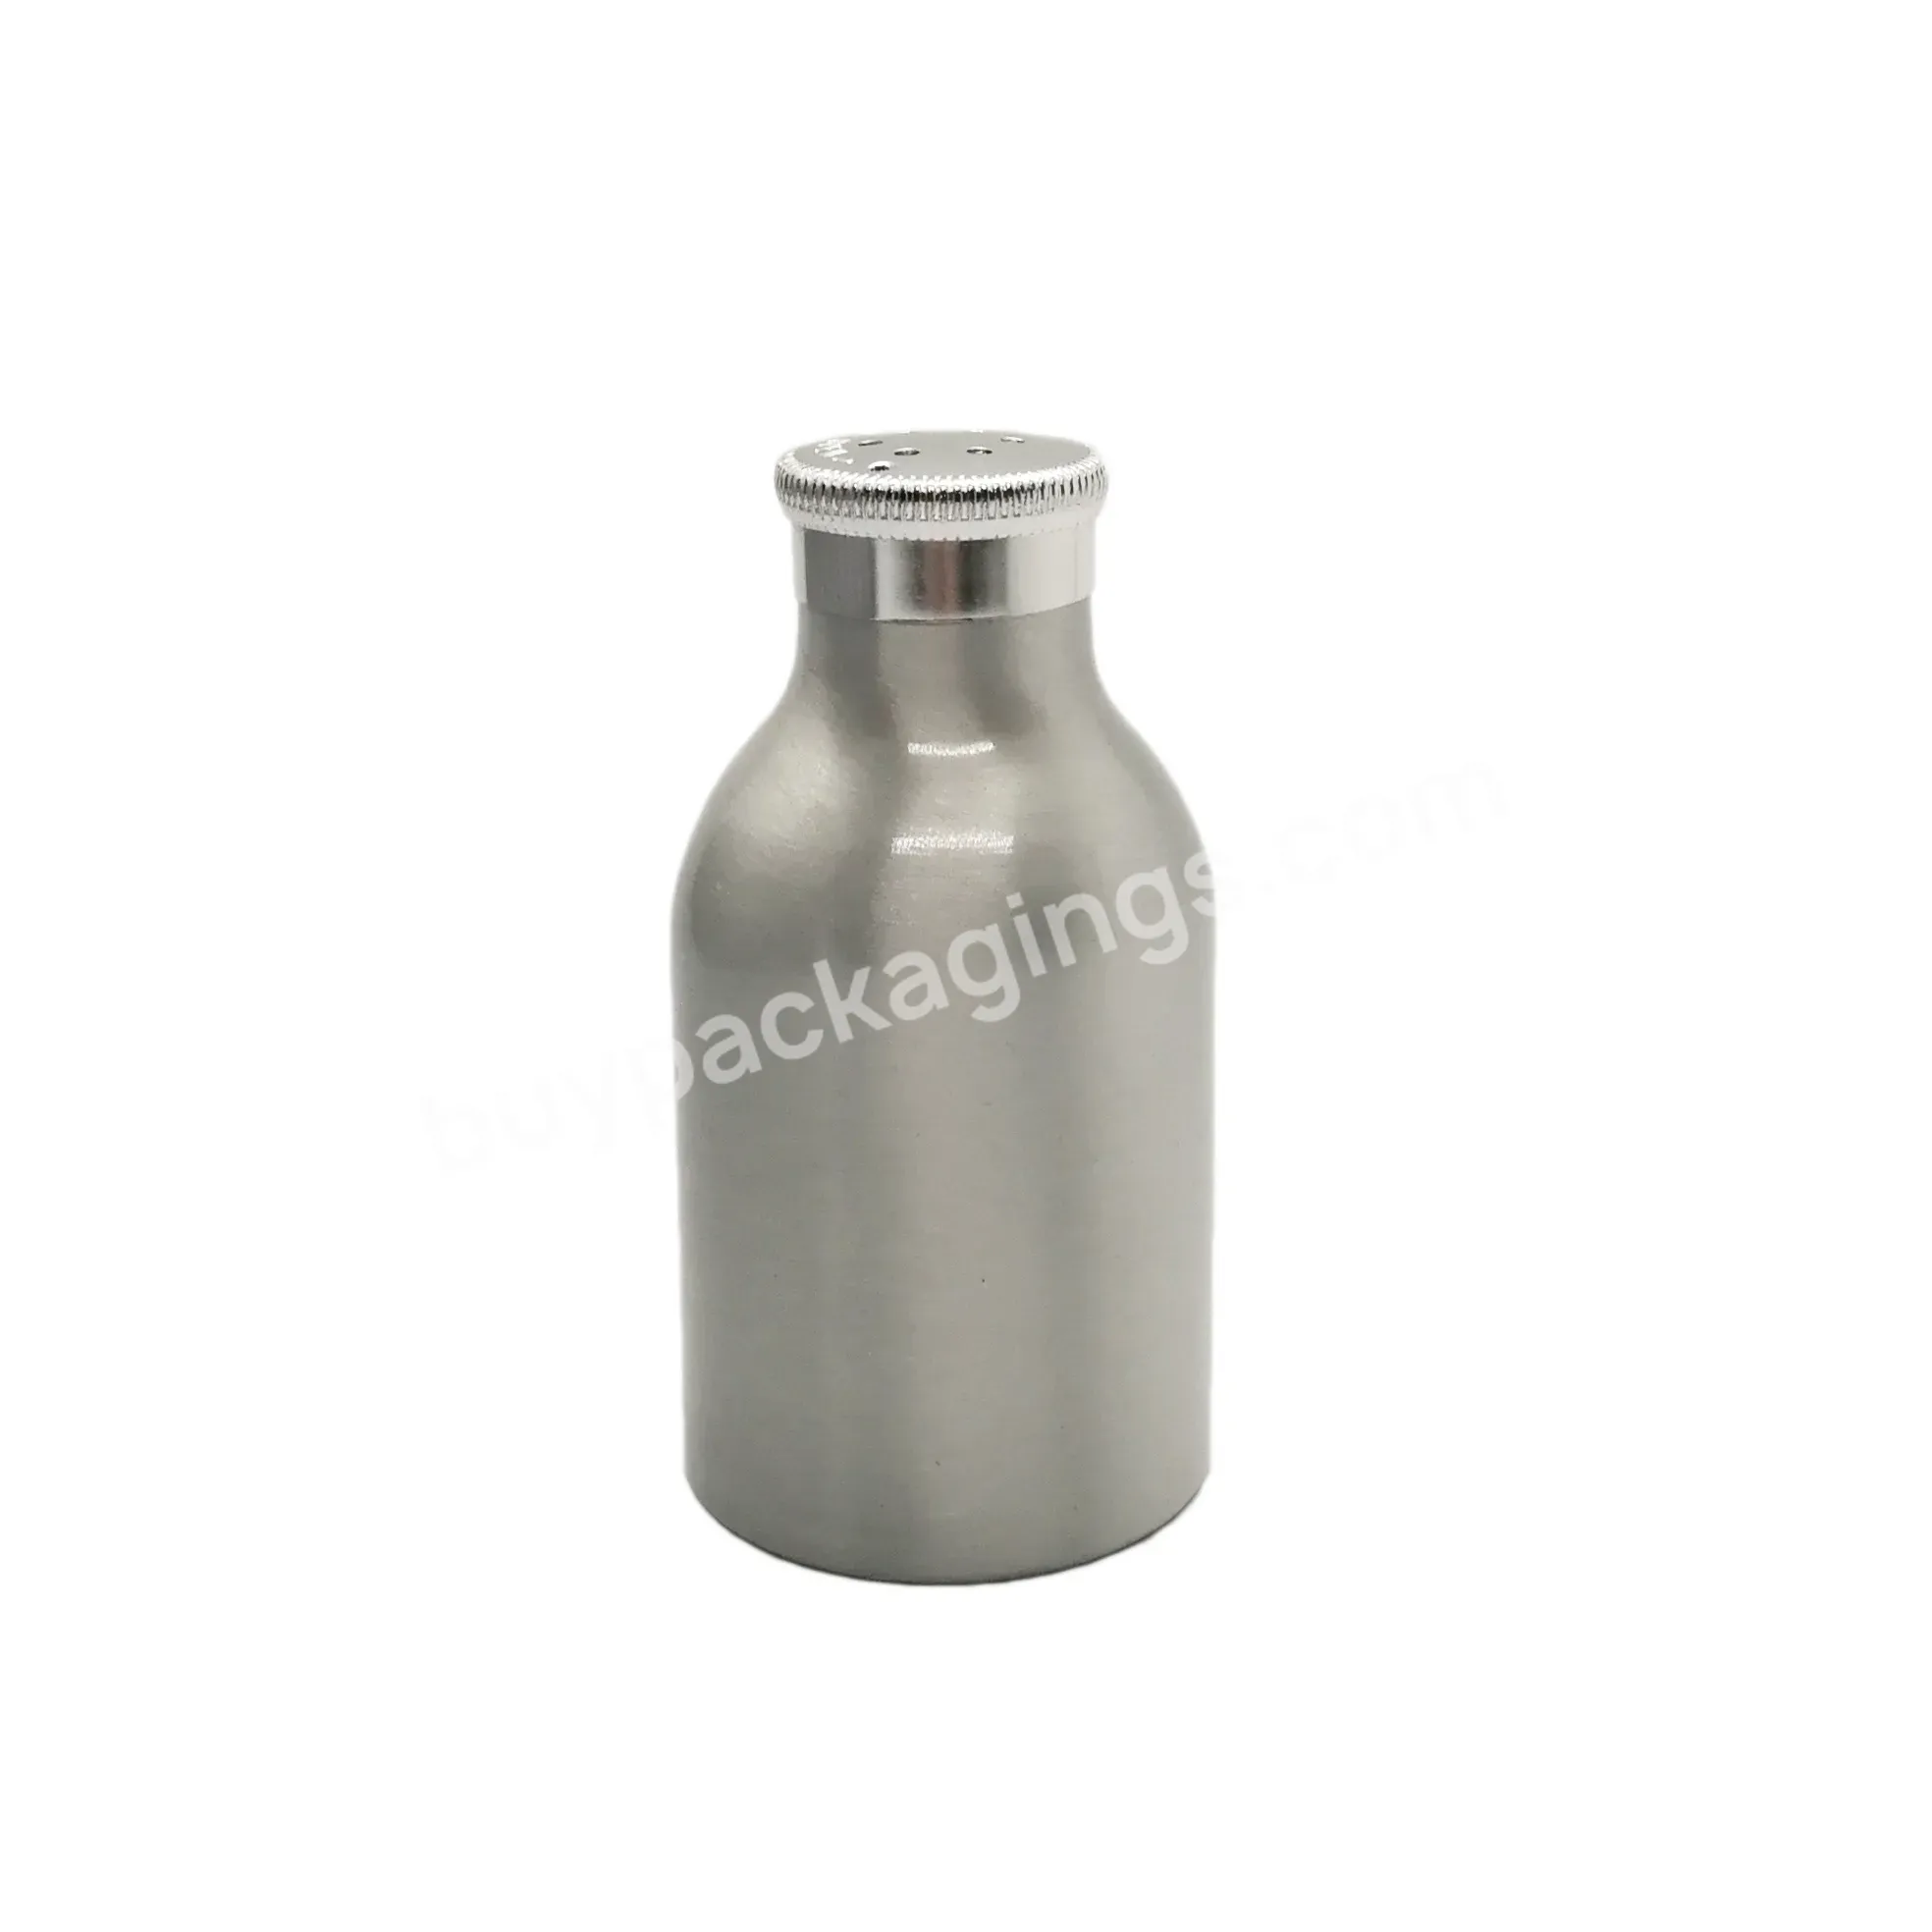 Oem 50g Mini Silver Aluminum Talc Powder Shaker Bottle With Silver Sifter Cap